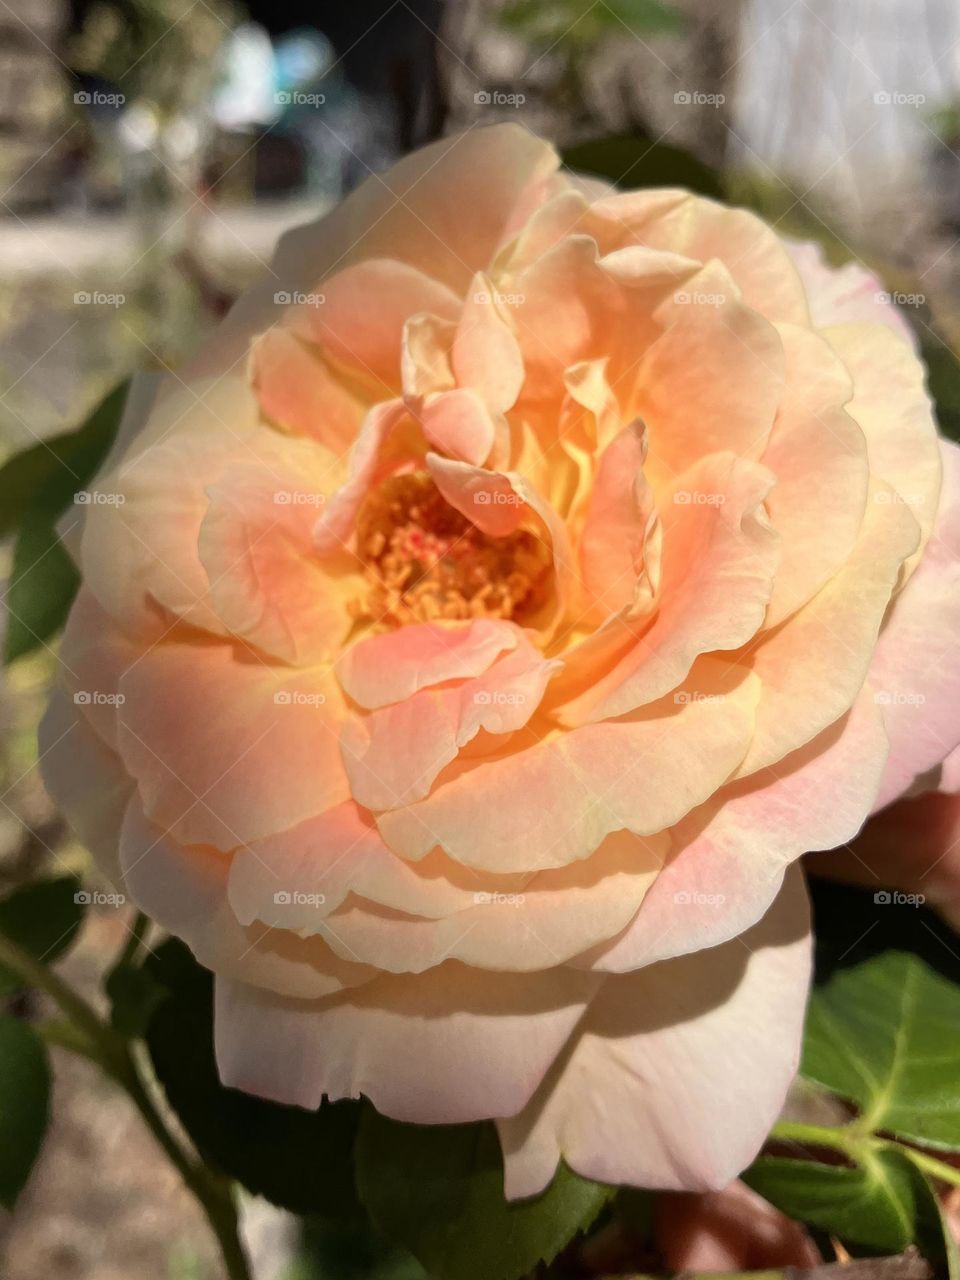 Sunny light on rose